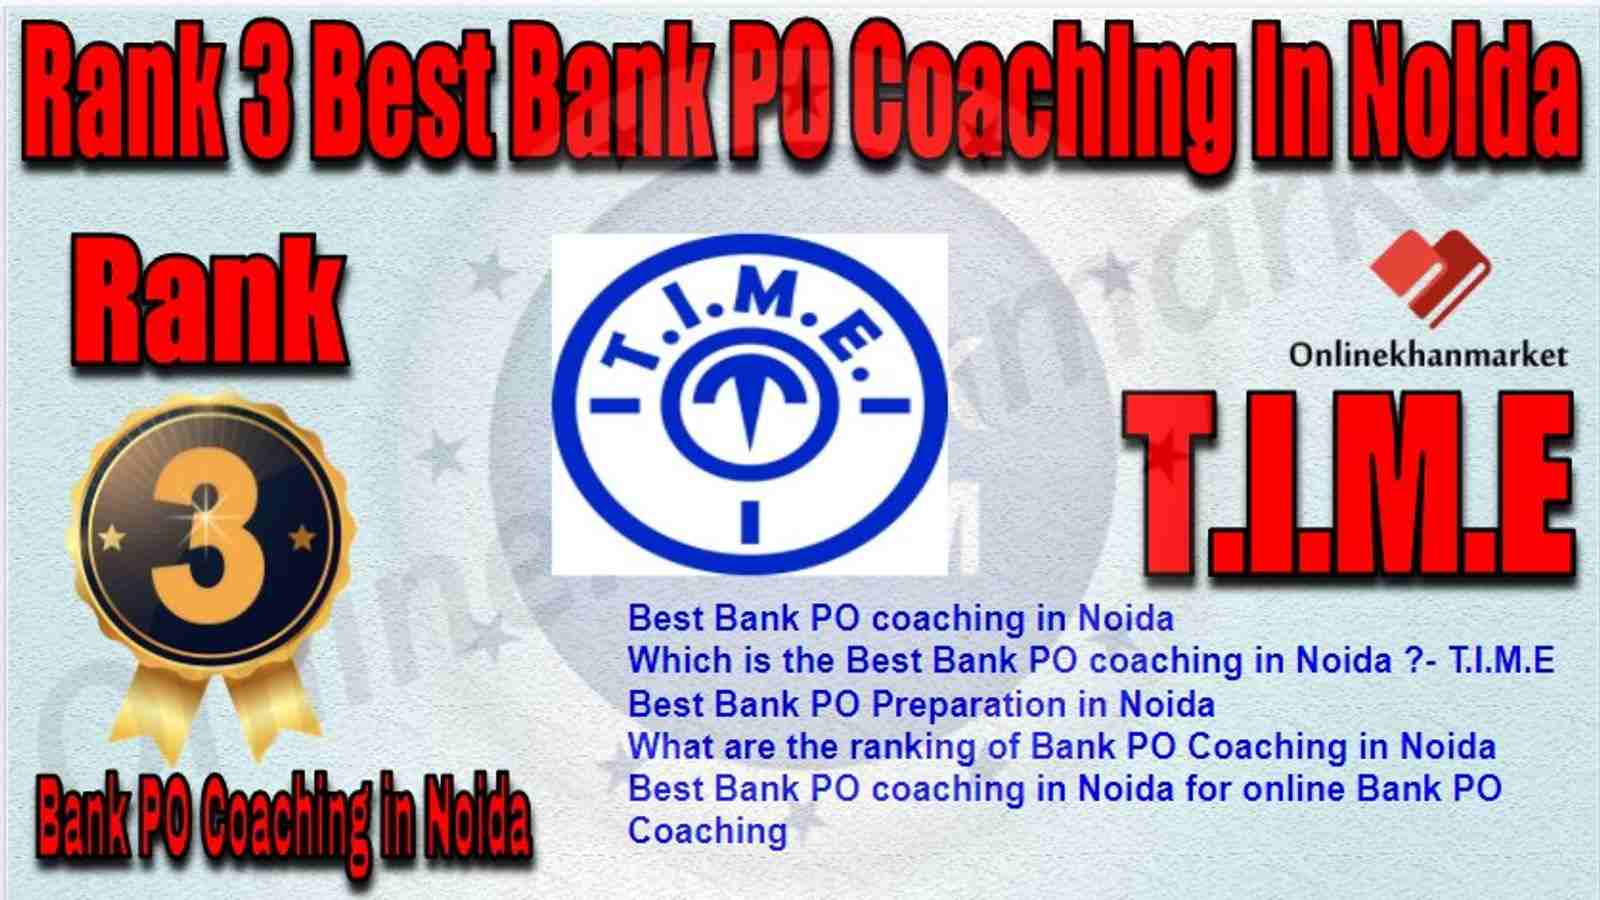 Rank 3 Best Bank PO Coaching in Noida